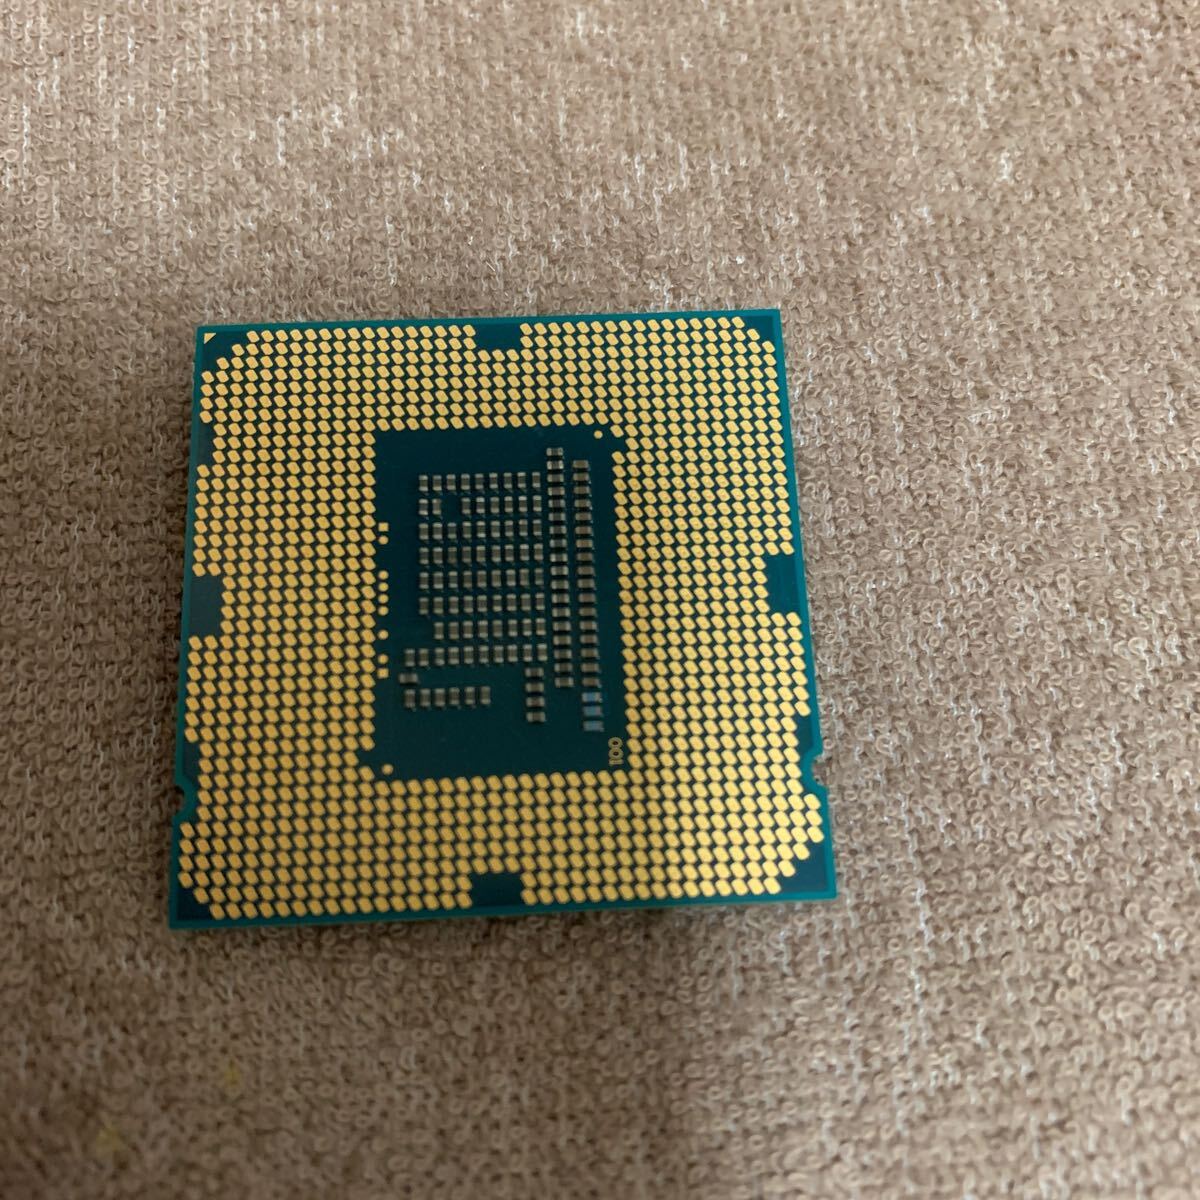 Intel Core i3 3240